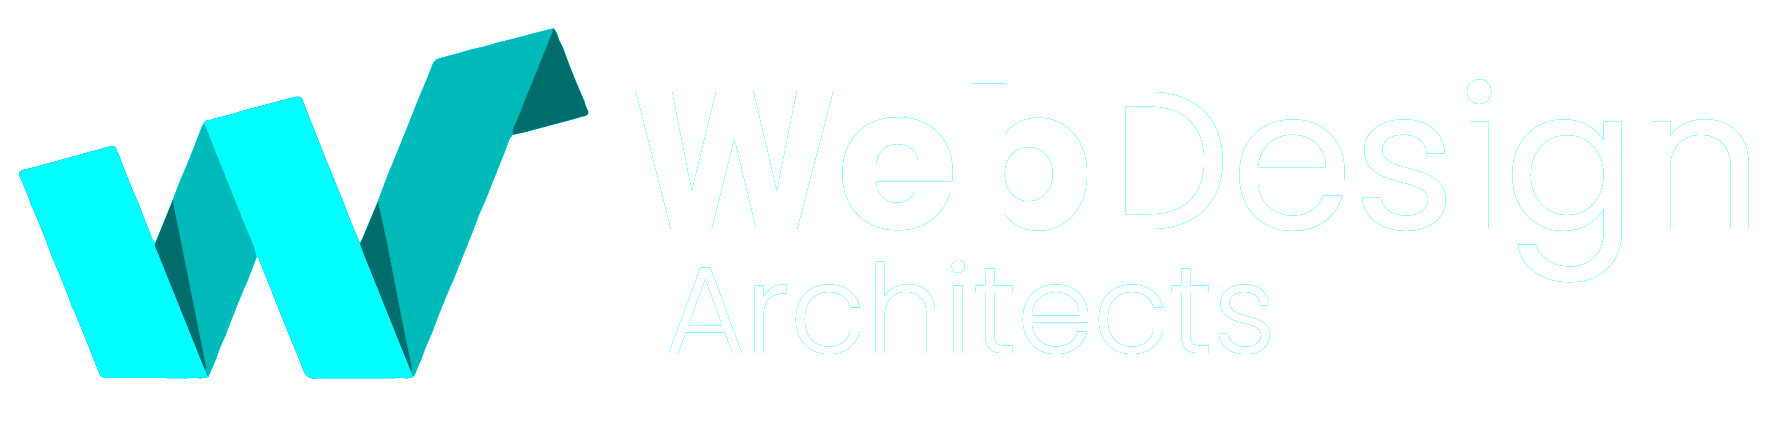 Web Design Architects